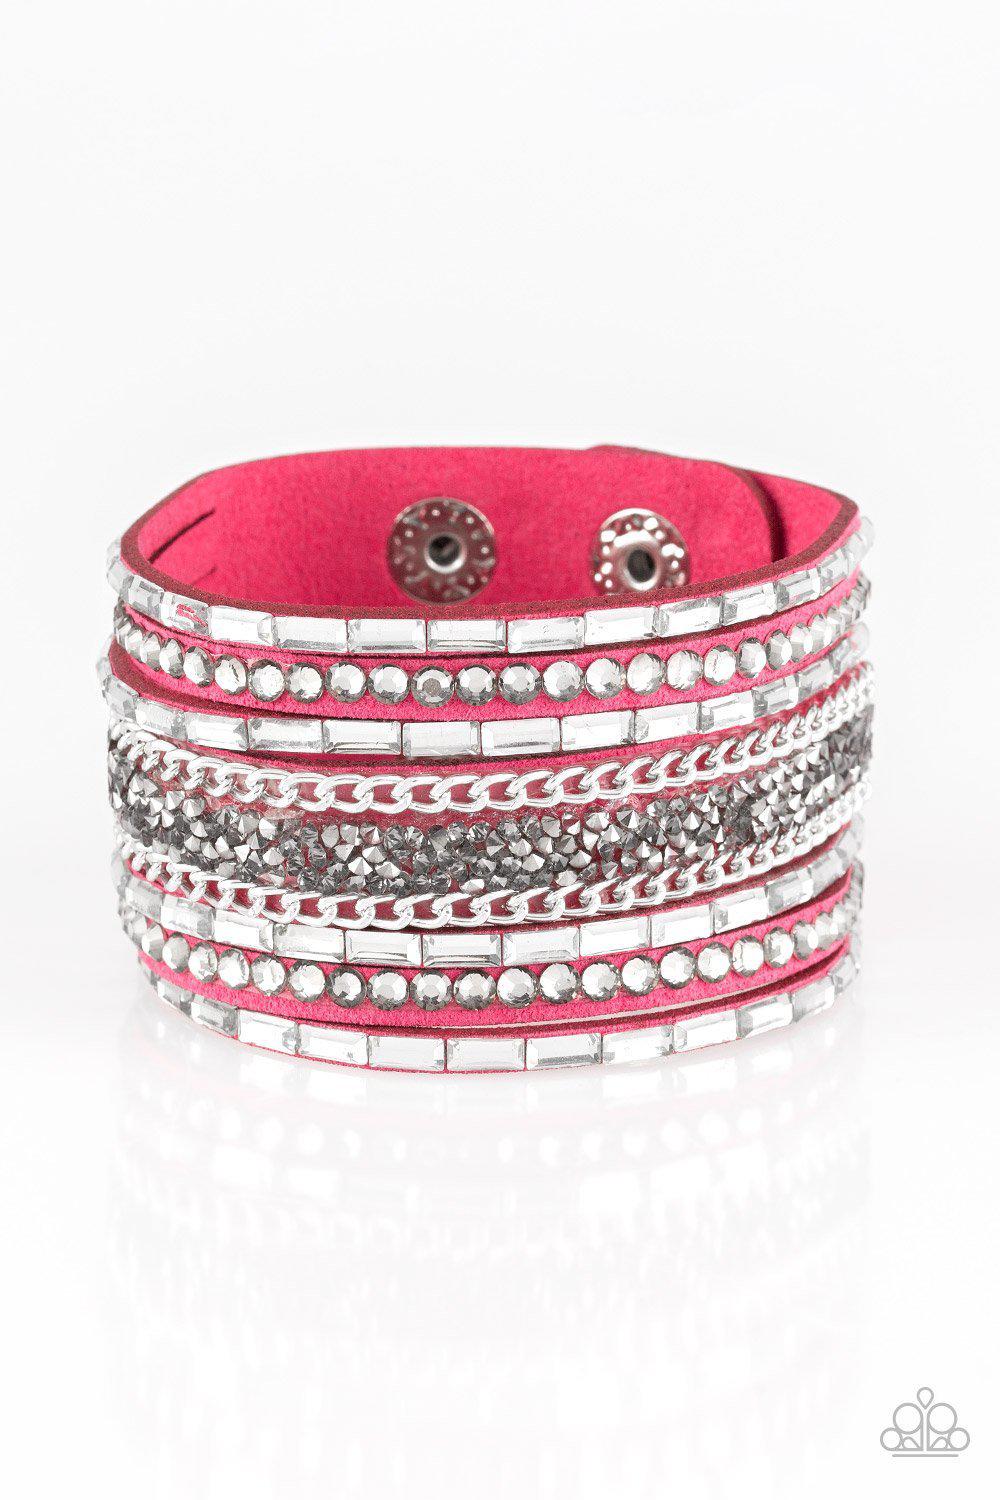 Rhinestone Rumble Pink Urban Wrap Snap Bracelet - Paparazzi Accessories- lightbox - CarasShop.com - $5 Jewelry by Cara Jewels